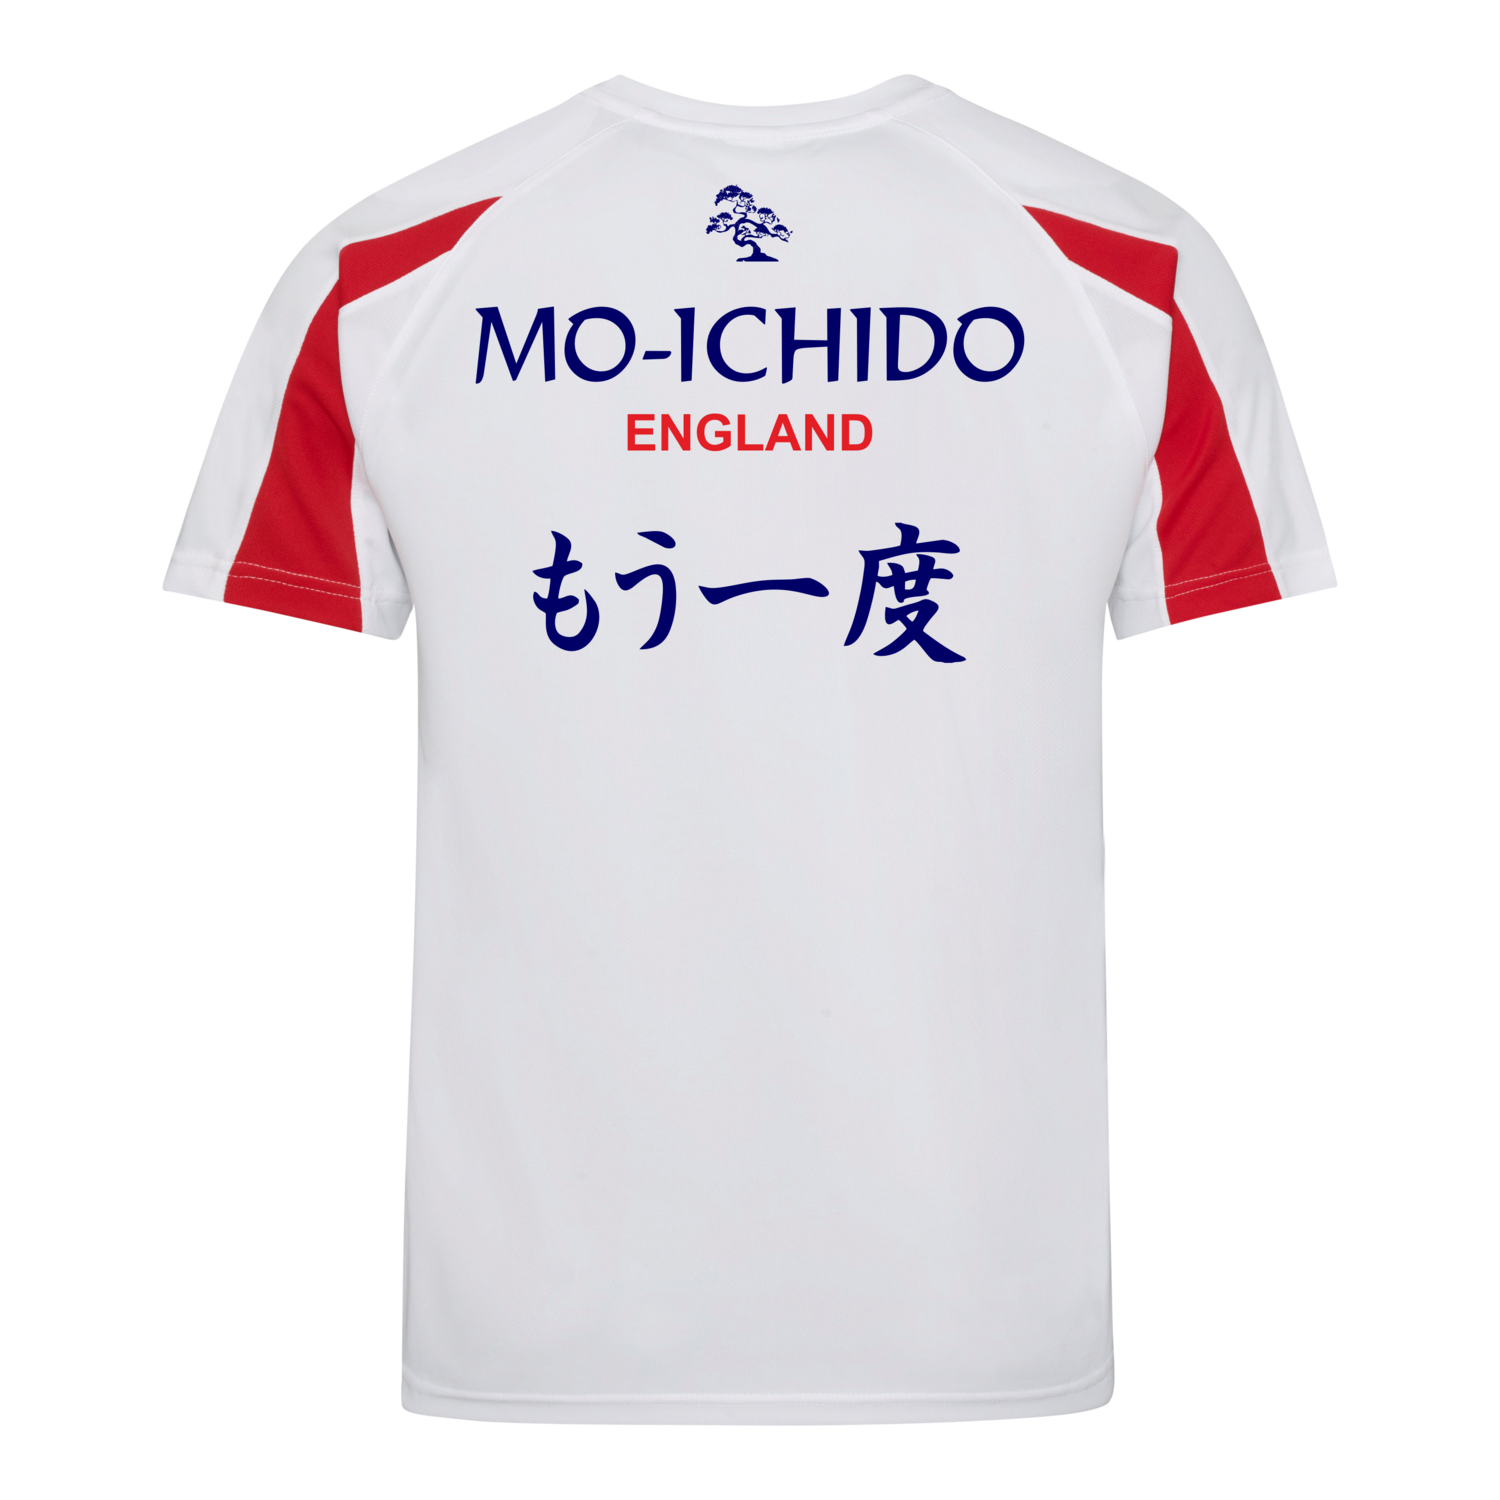 Mo-ichido T-shirt